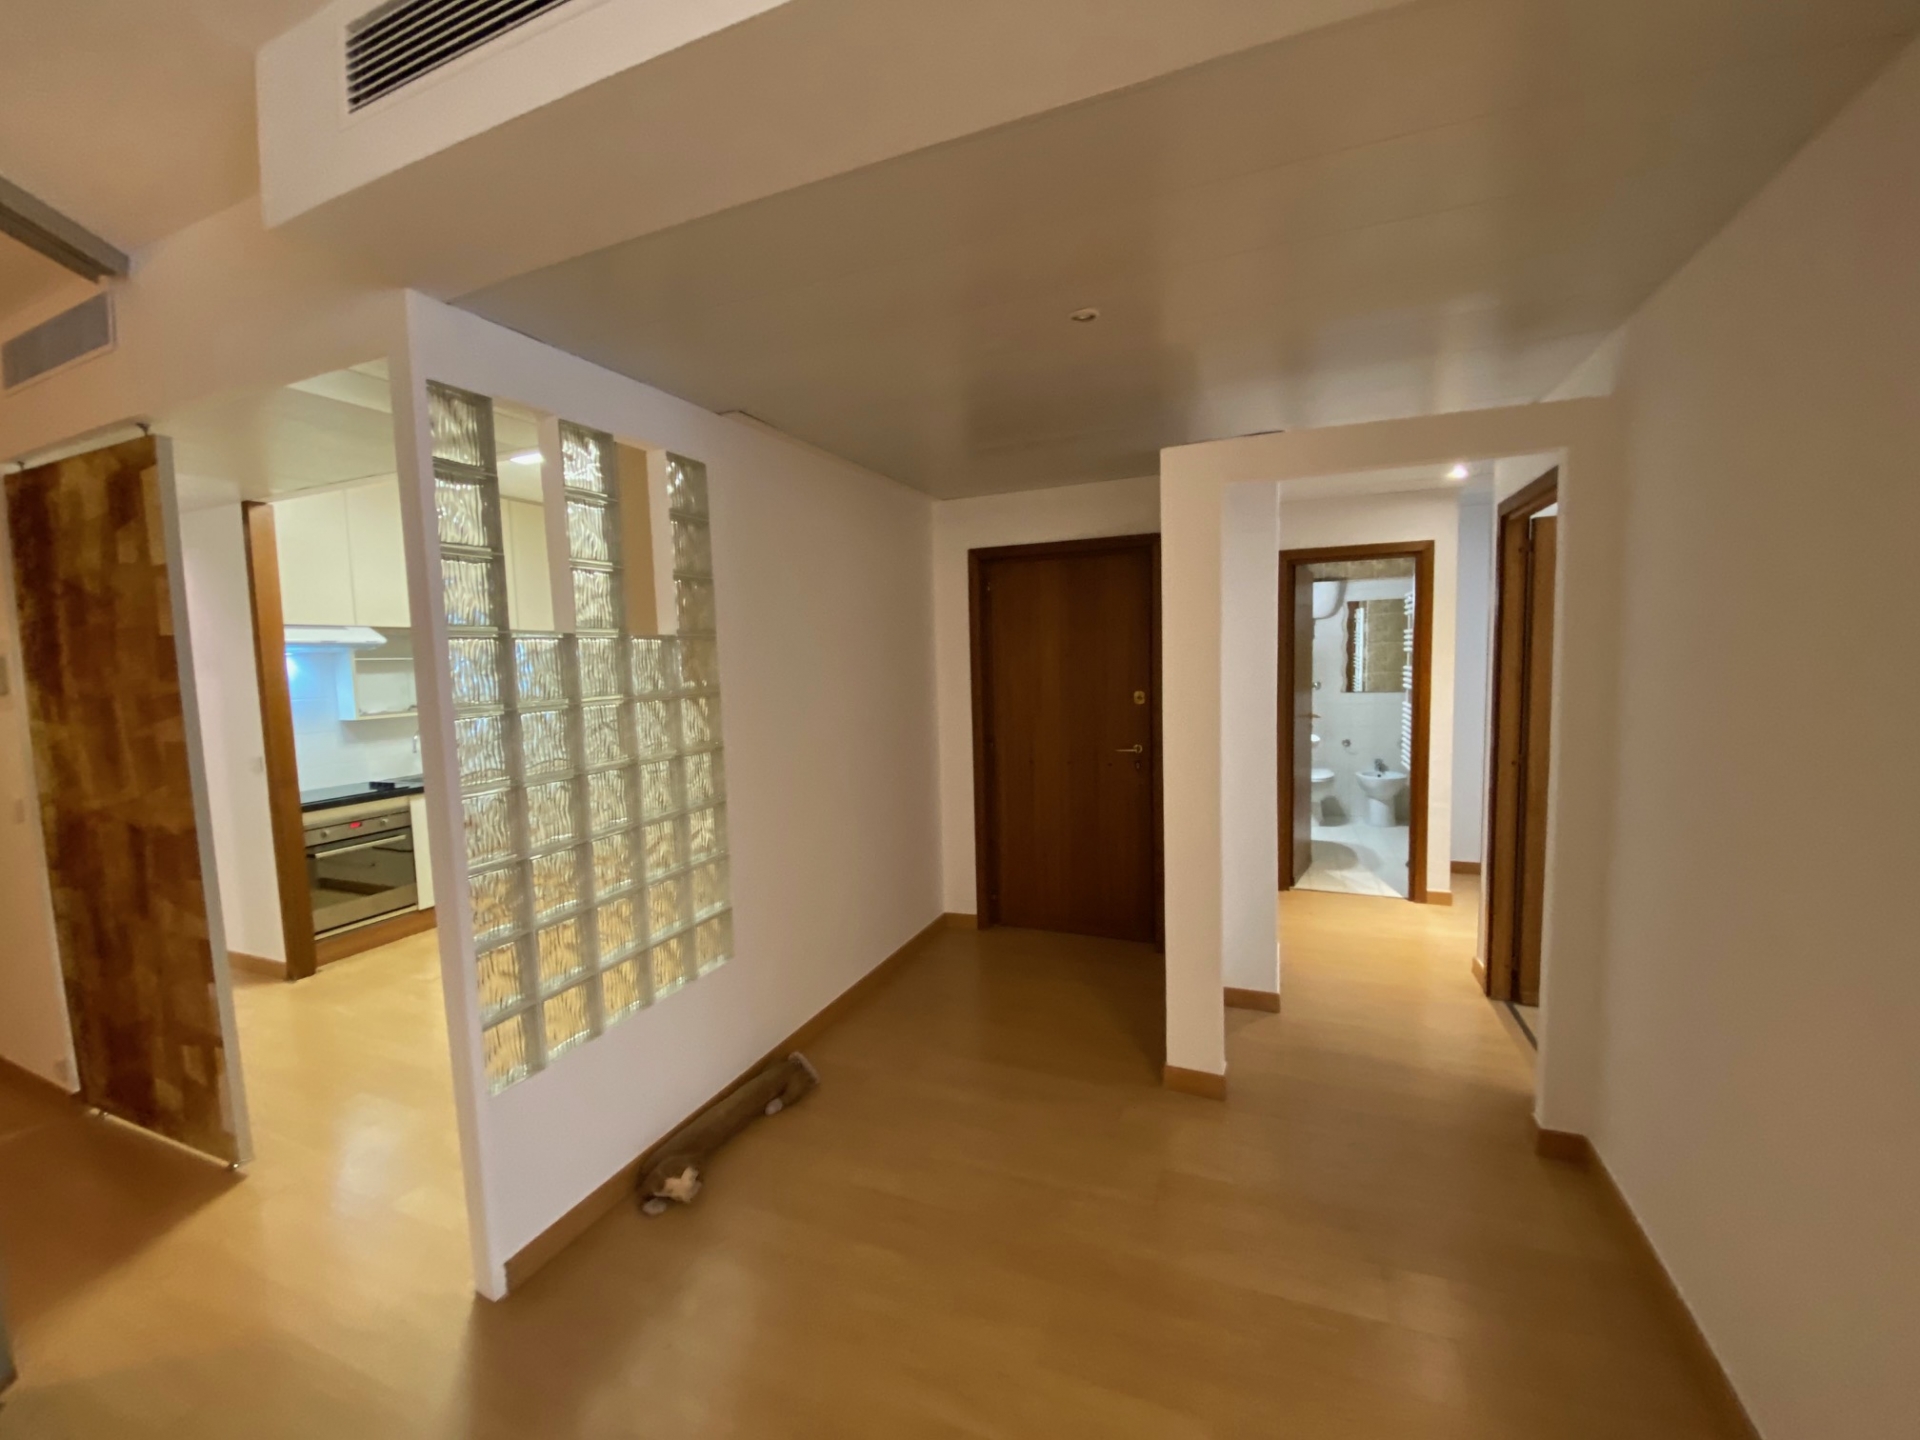 Dotta Appartement de 4 pieces a vendre - VALLESPIR - Larvotto - Monaco - img8173